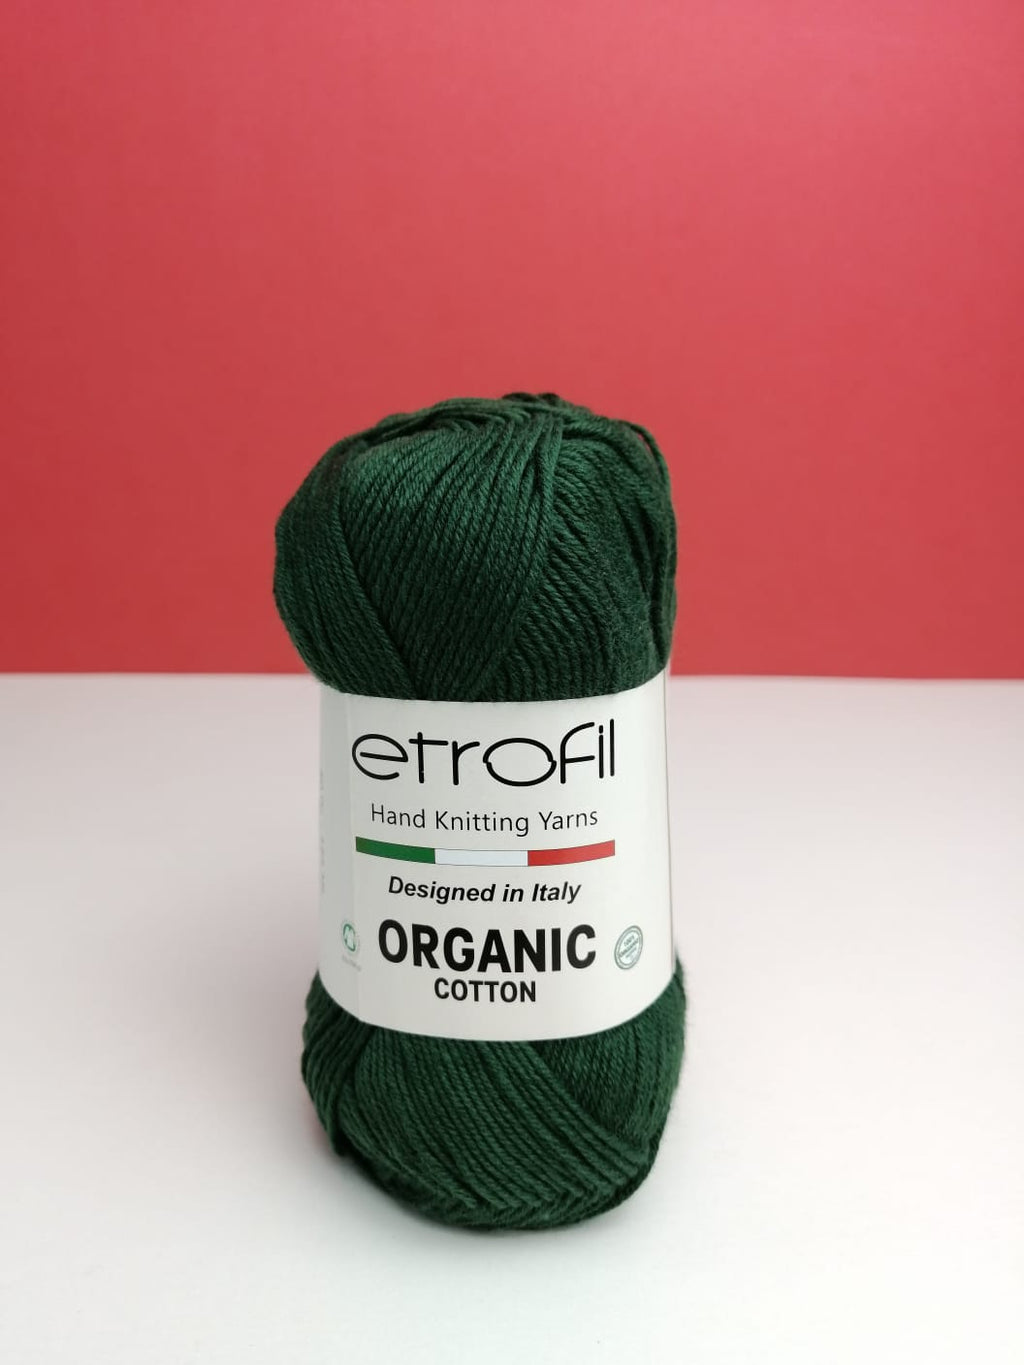 Etrofil Organic Cotton - EB044